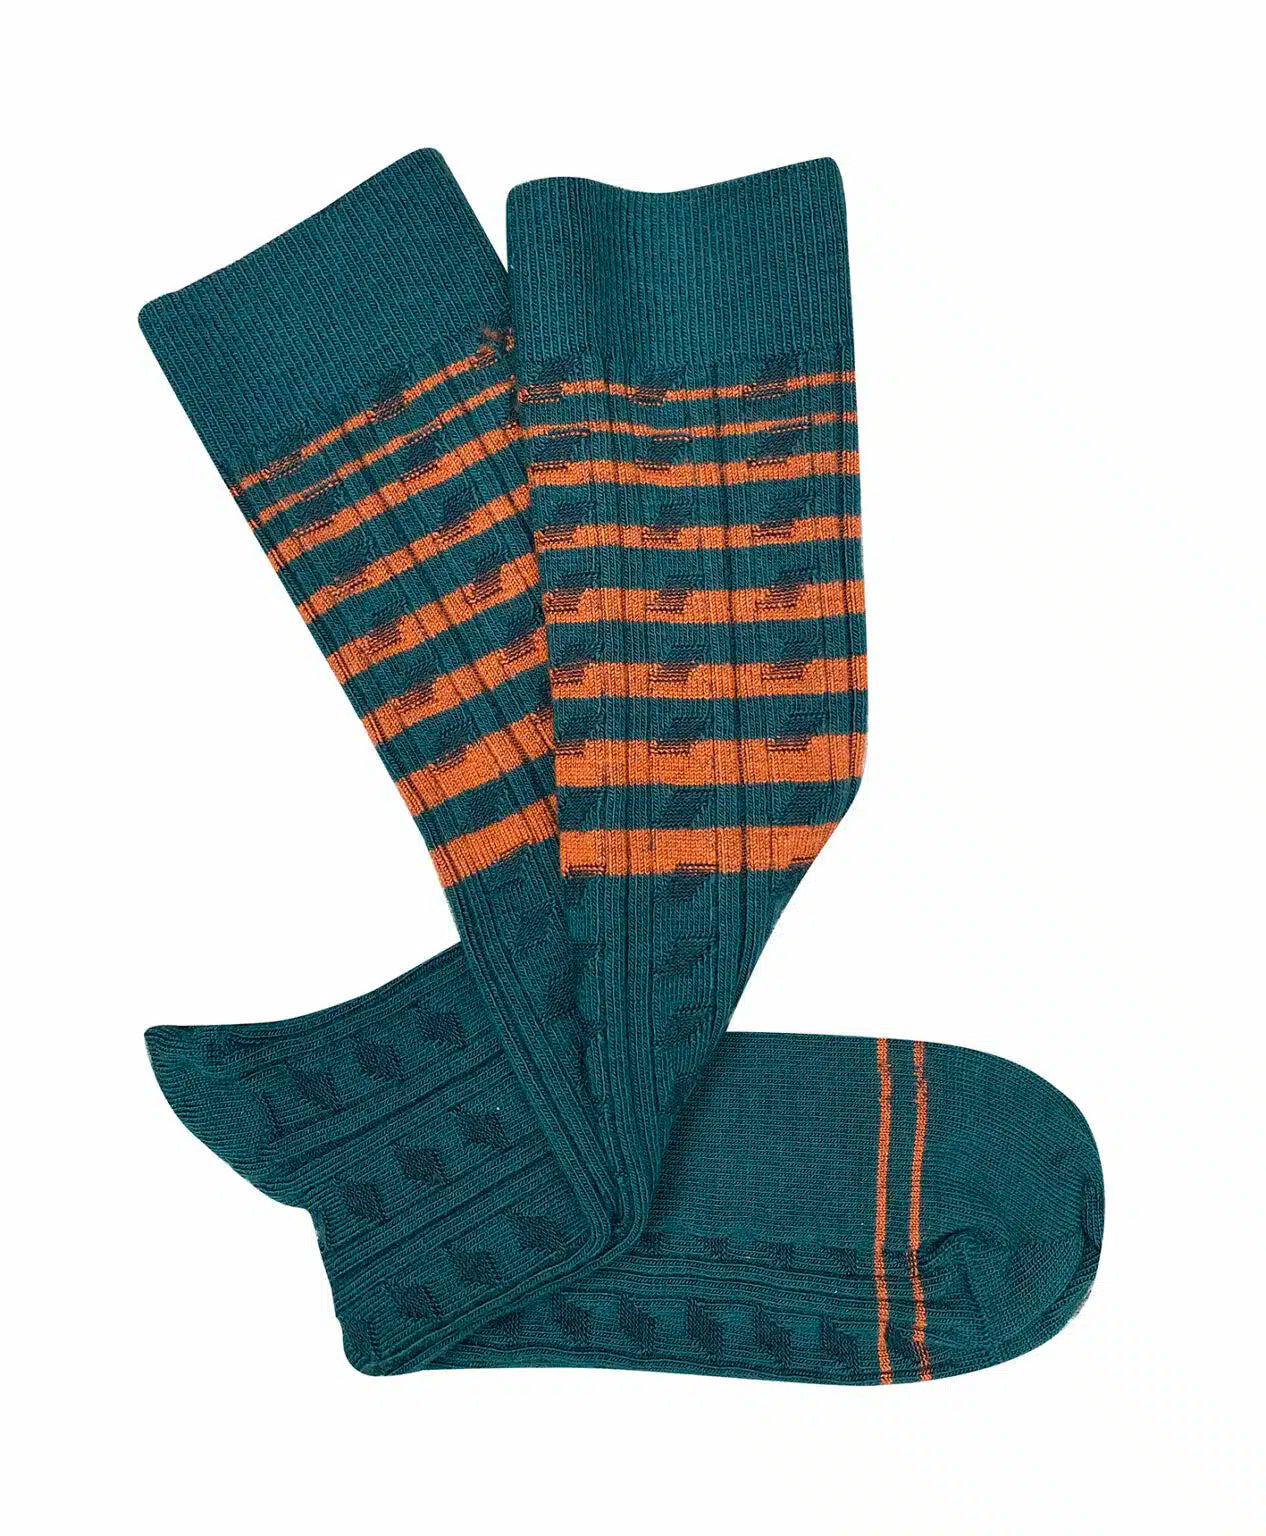 'Harmony' Merino Socks - Tightology socks Tightology Green 